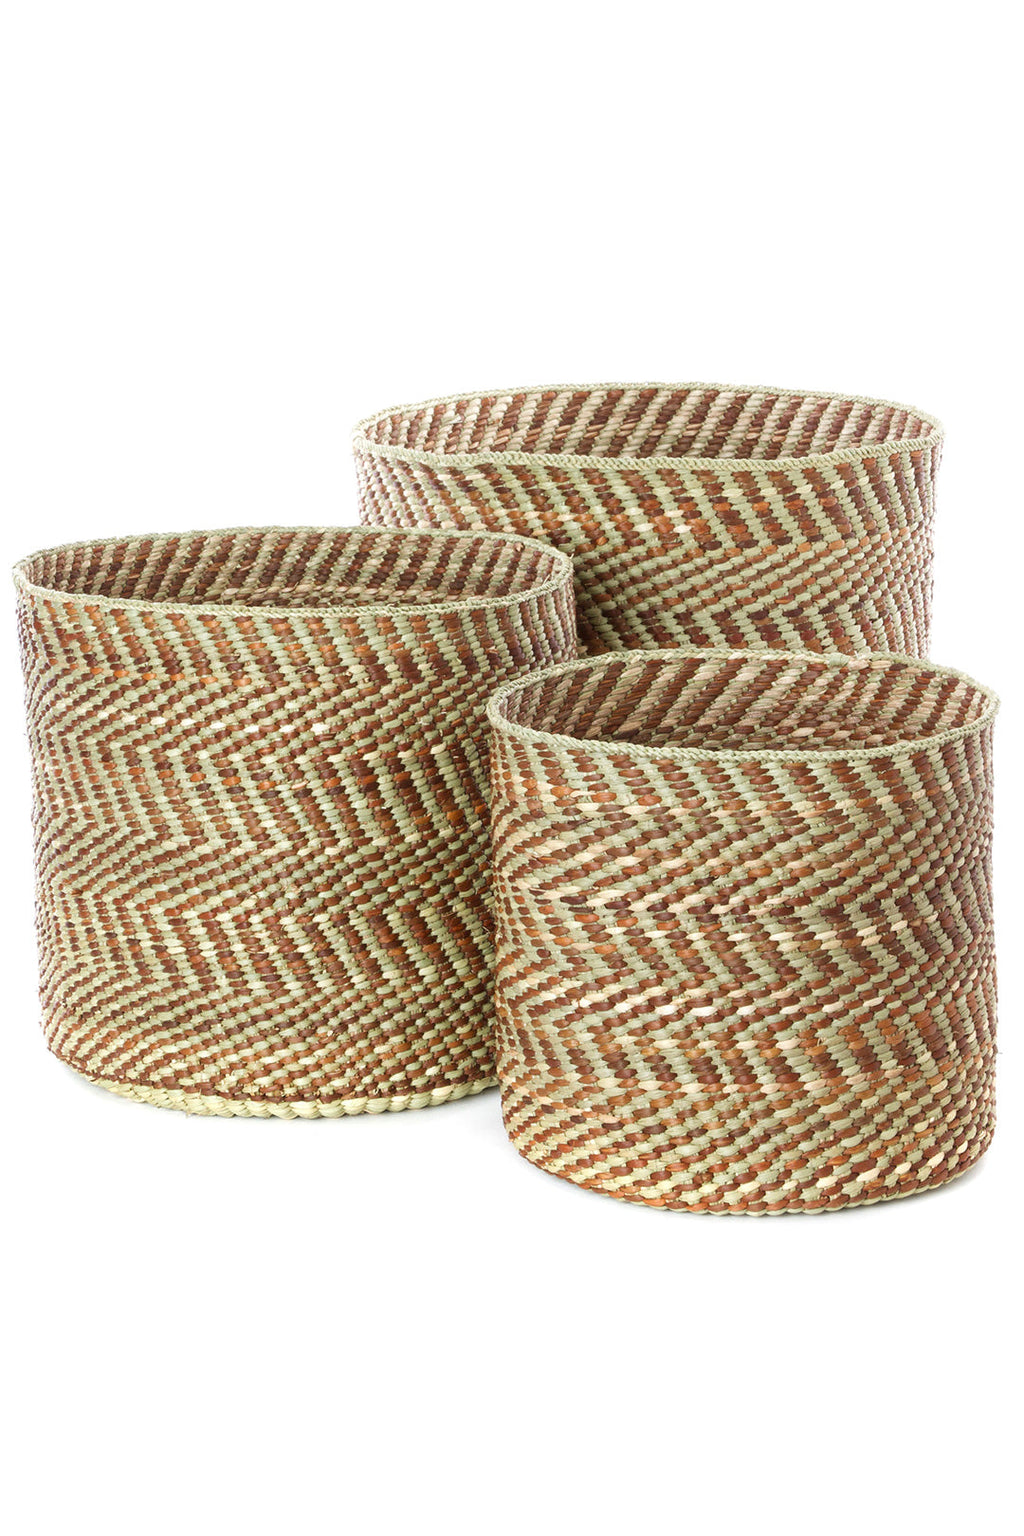 Brown & Natural Maila Milulu Reed Baskets, Image